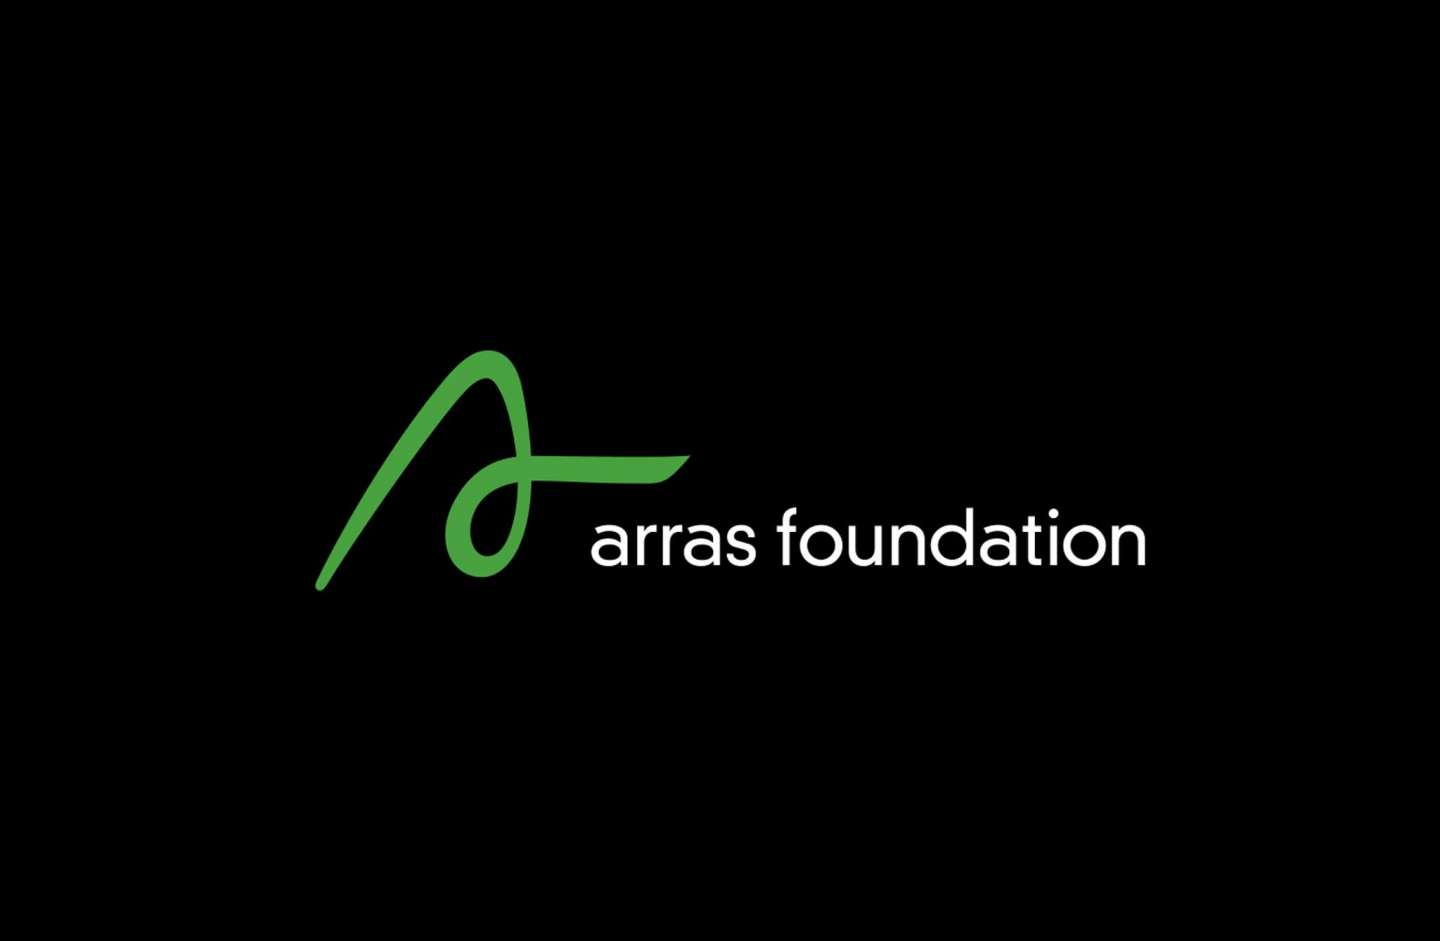 Arras Foundation Visual Identity Guidelines